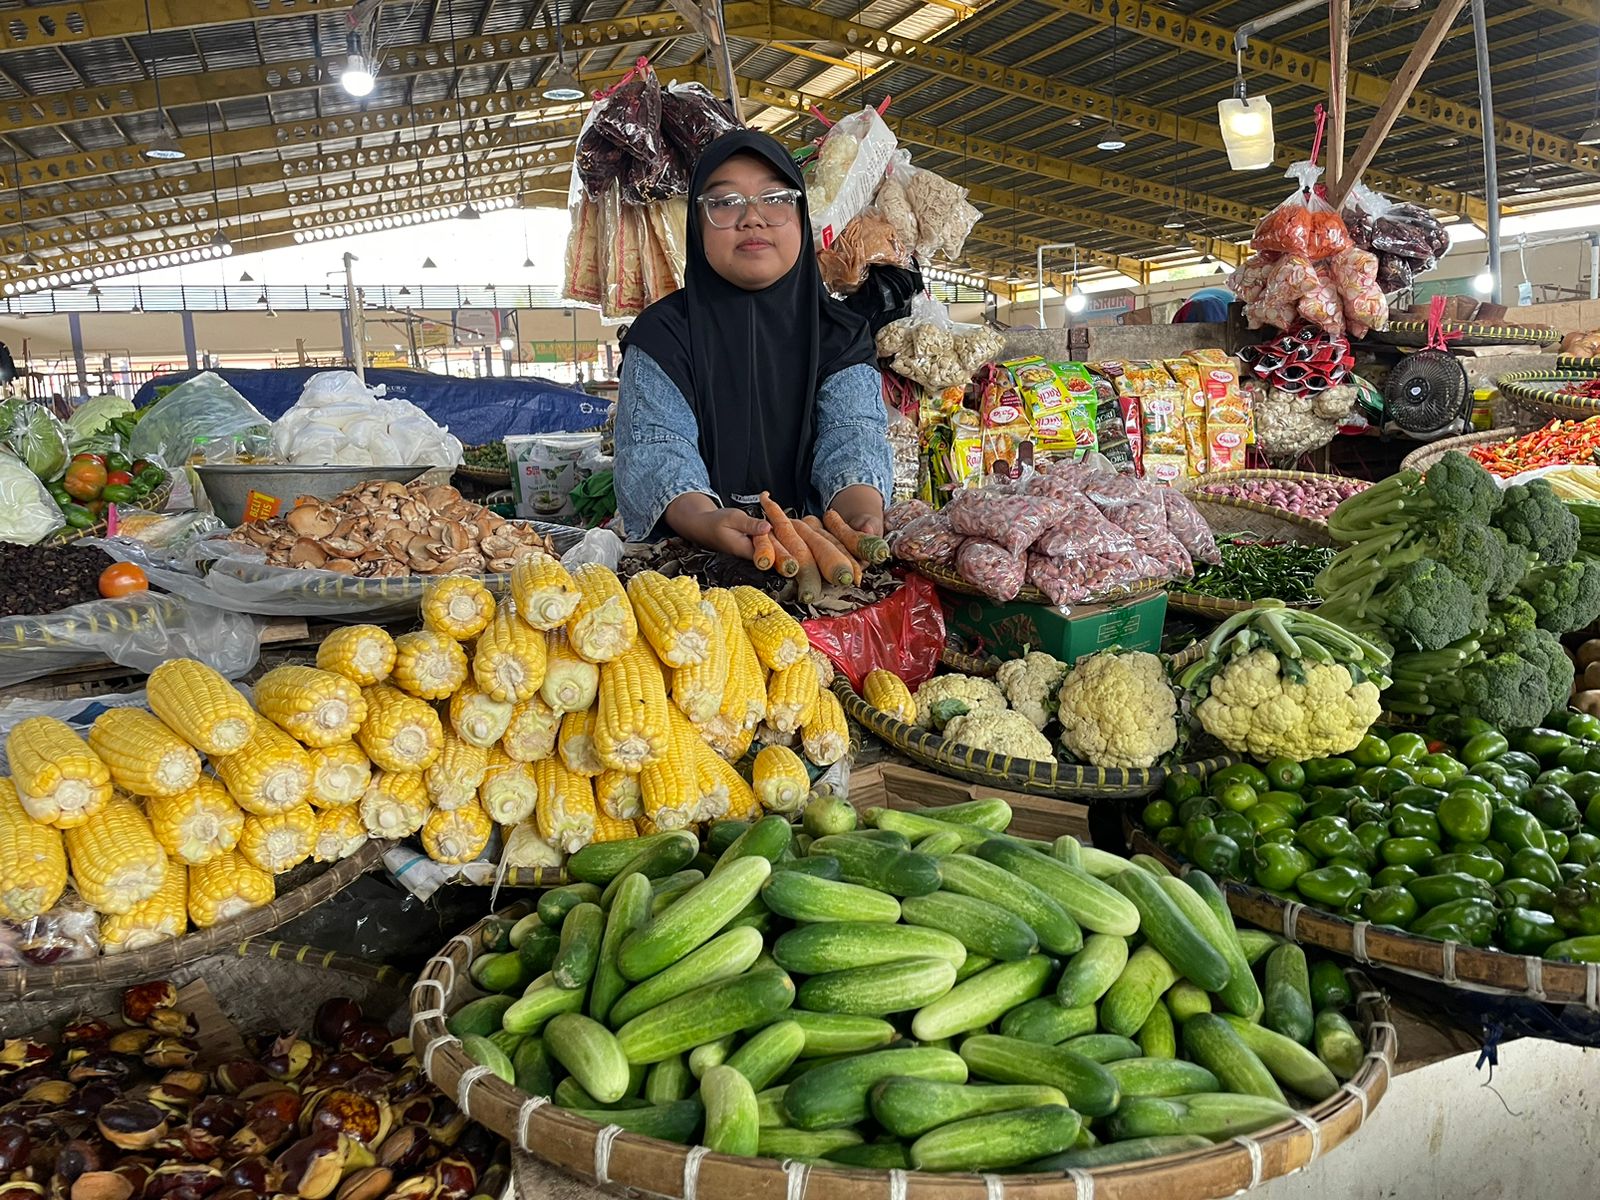 Harga sayuran di Pasar Soreang Kabupaten Bandung alami kenaikan sigifikan akibat faktor cuaca dan kemarau panjang. Agi/Jabar Ekspres.